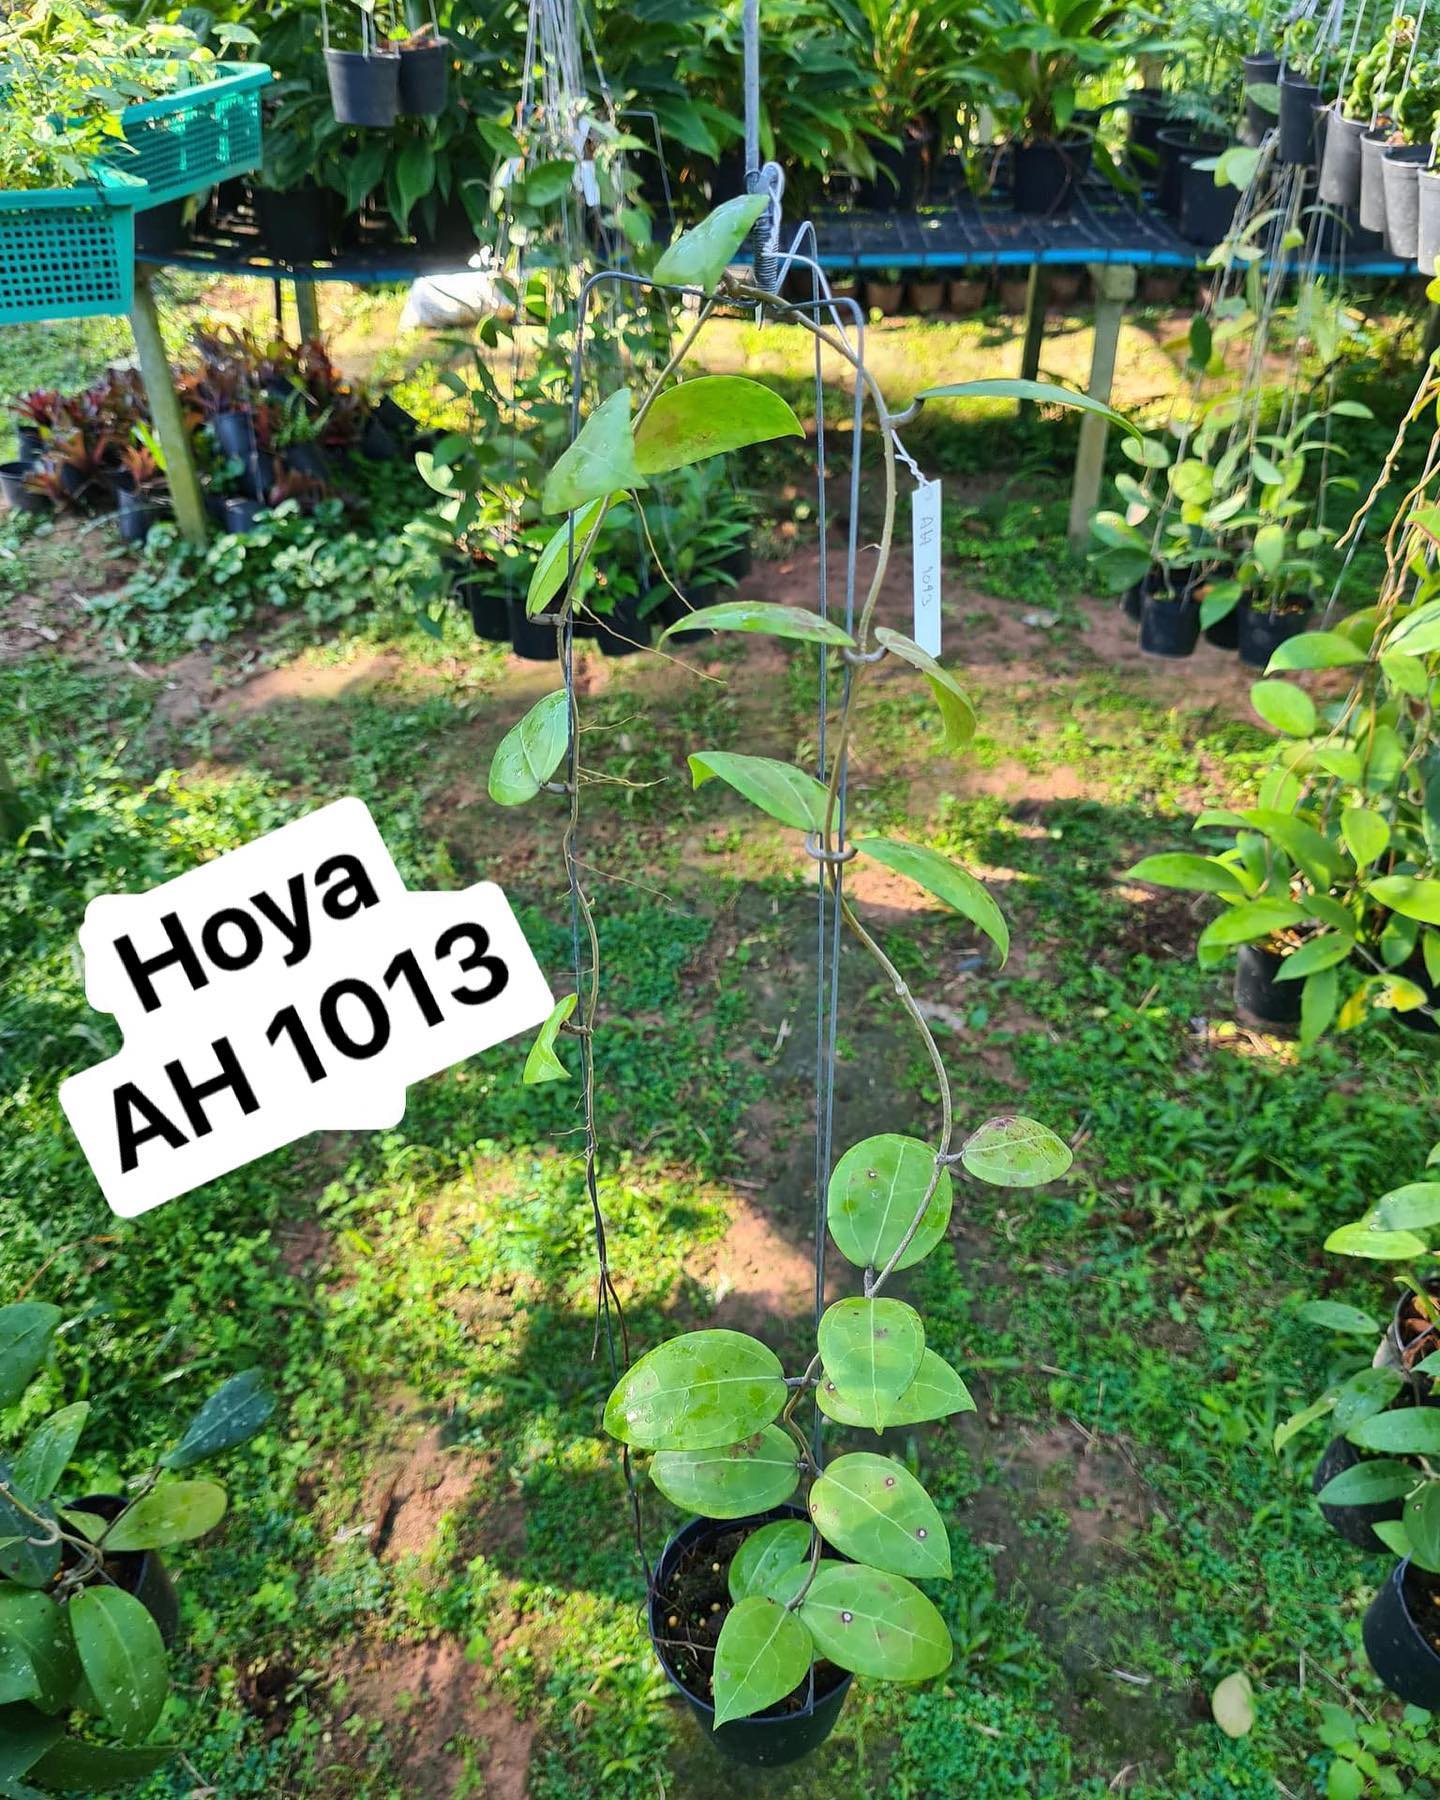 Hoya AH 1013